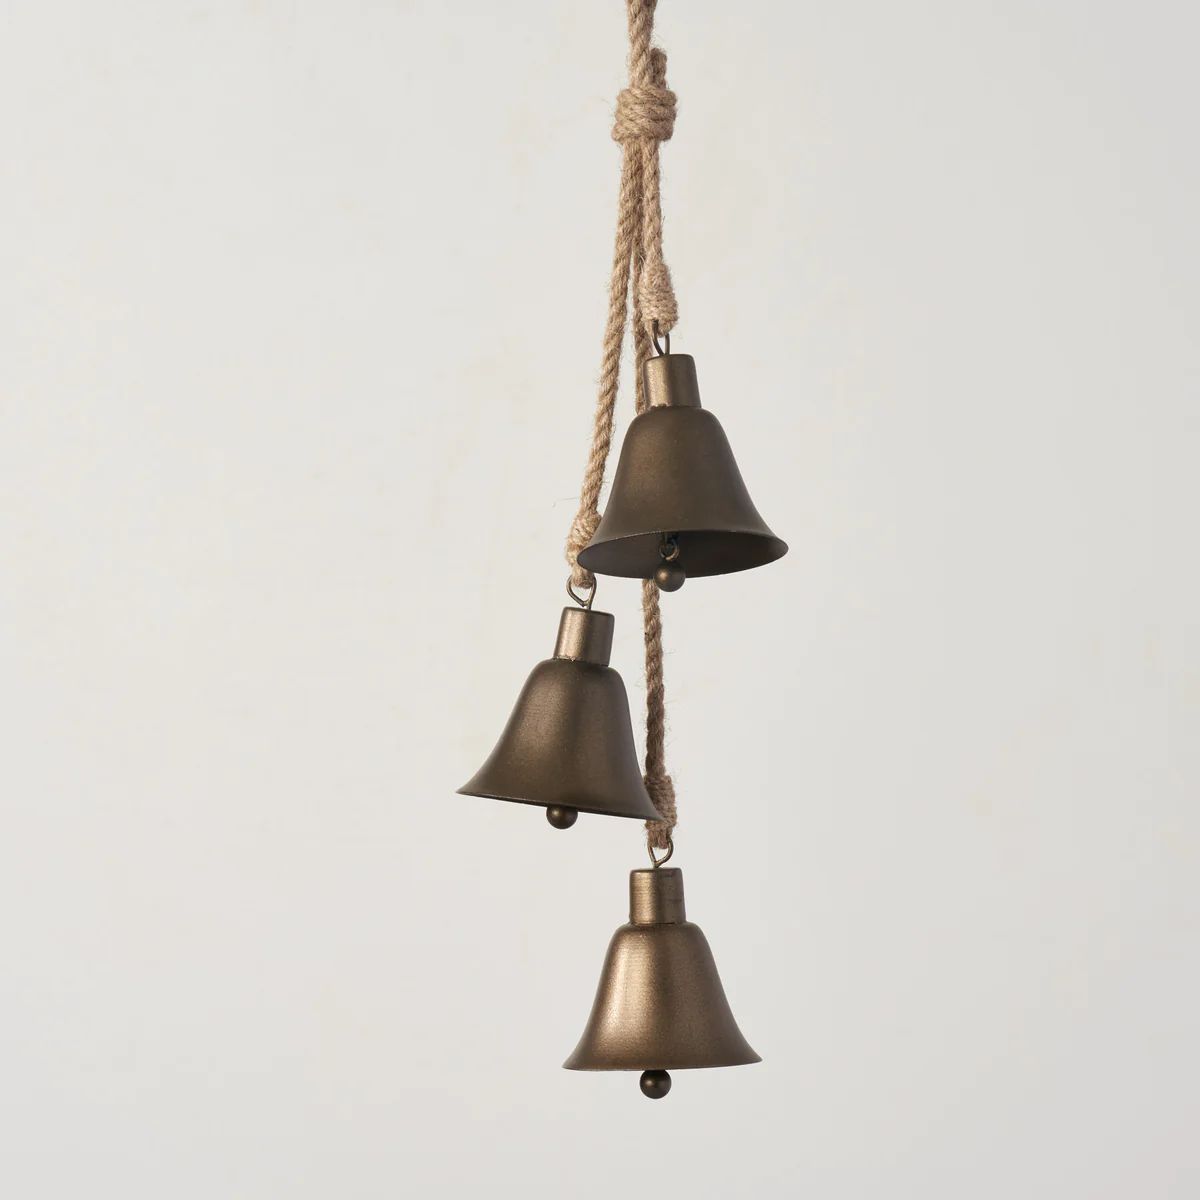 Bronze Sleek Metal Bell Ornament Hanging Decor with Jute Set of 2 | Darby Creek Trading